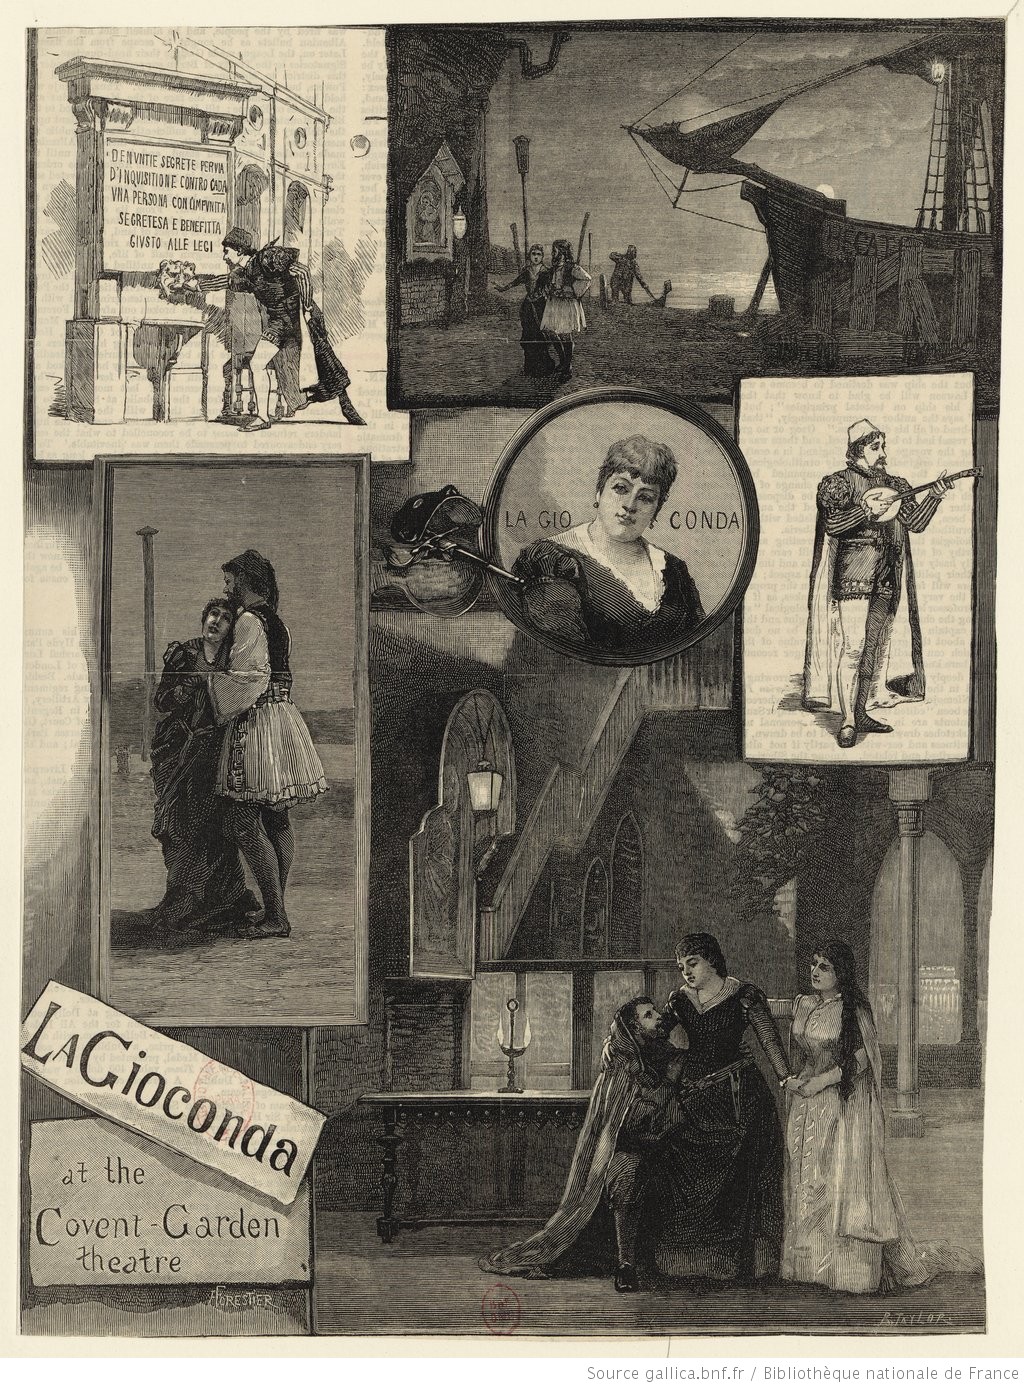 La Gioconda at the Covent-Garden theatre, estampe Forestier [sig.], B. Taylor [sig,], 1883, Copyright: domaine public, ID: ark:/12148/btv1b8437750c, Bibliothèque nationale de France